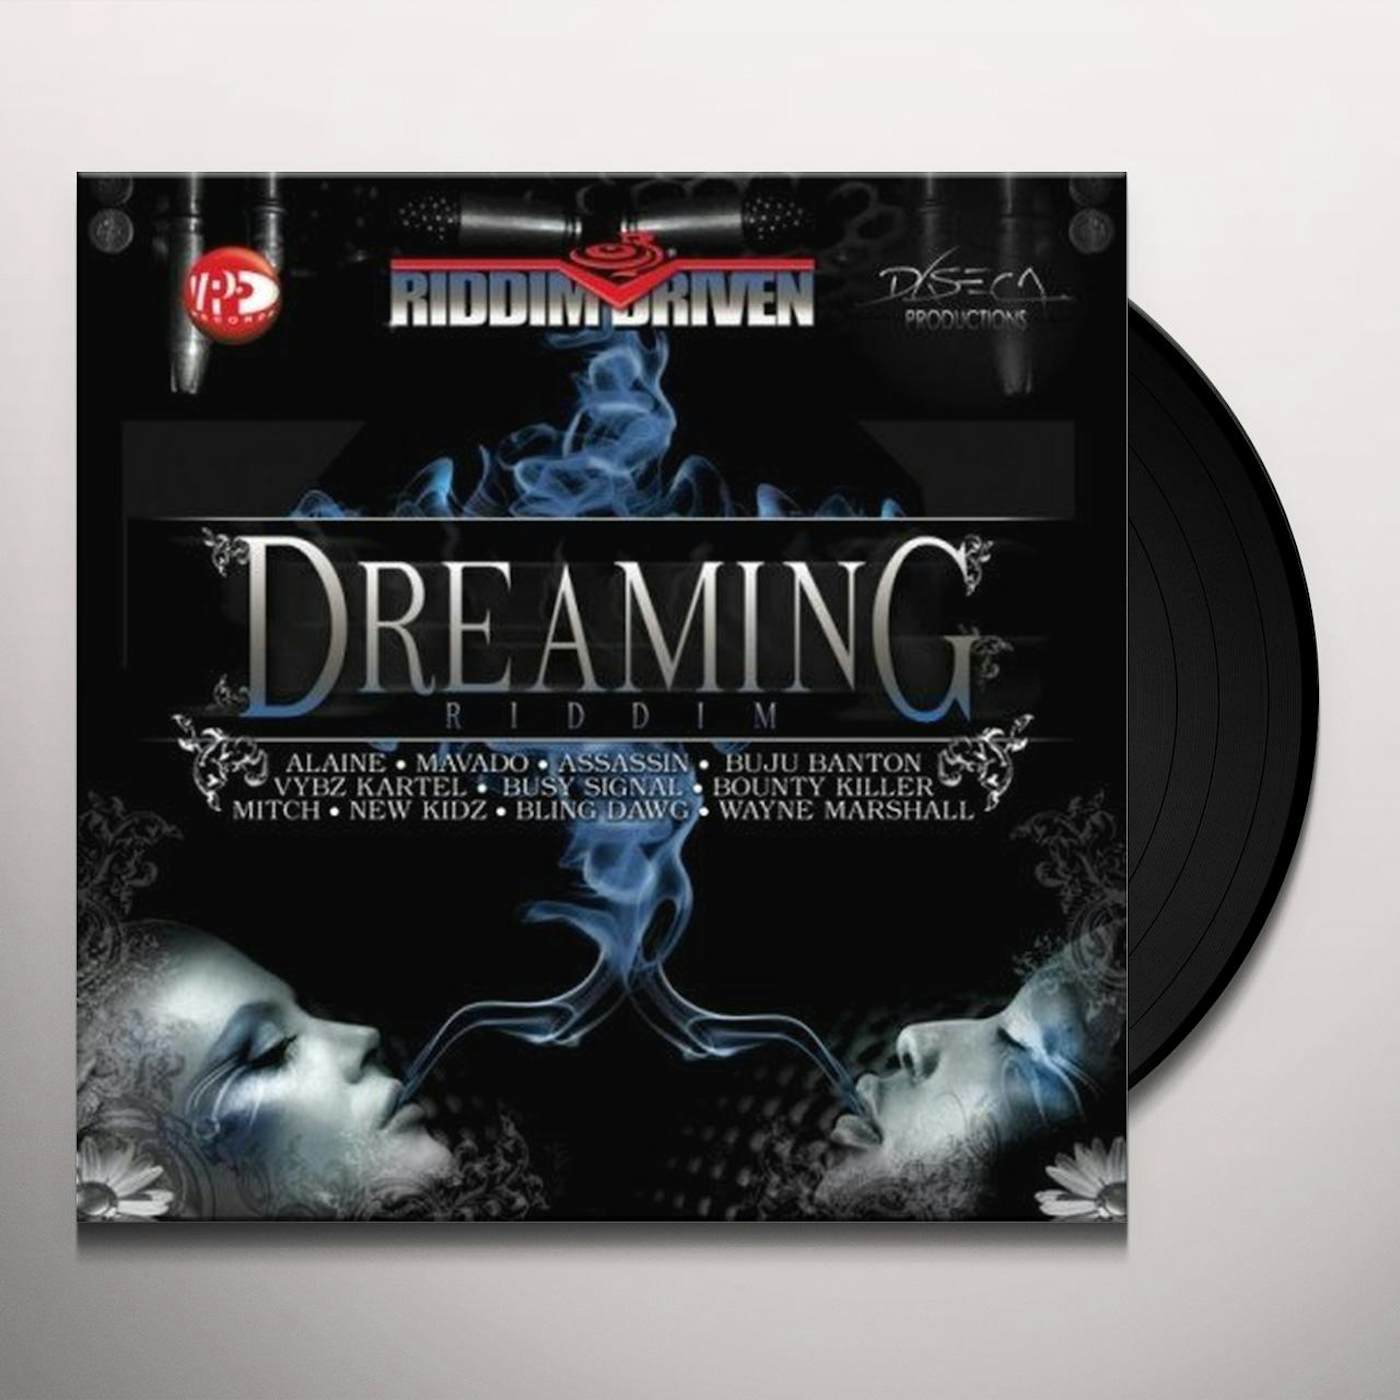 DREAMING RIDDIM DRIVEN / VARIOUS (Vinyl)